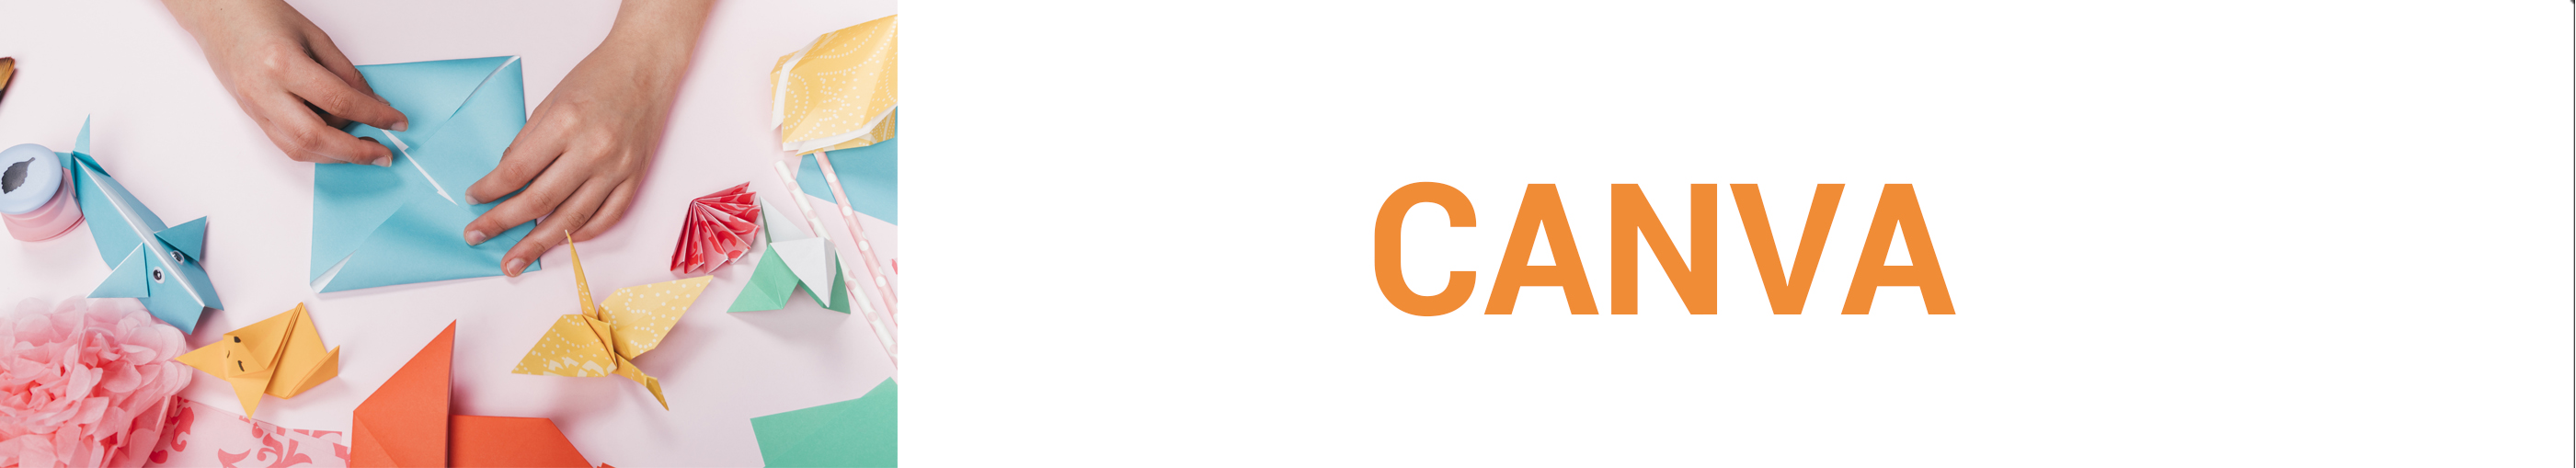 Canva Logo - STAAH Blog